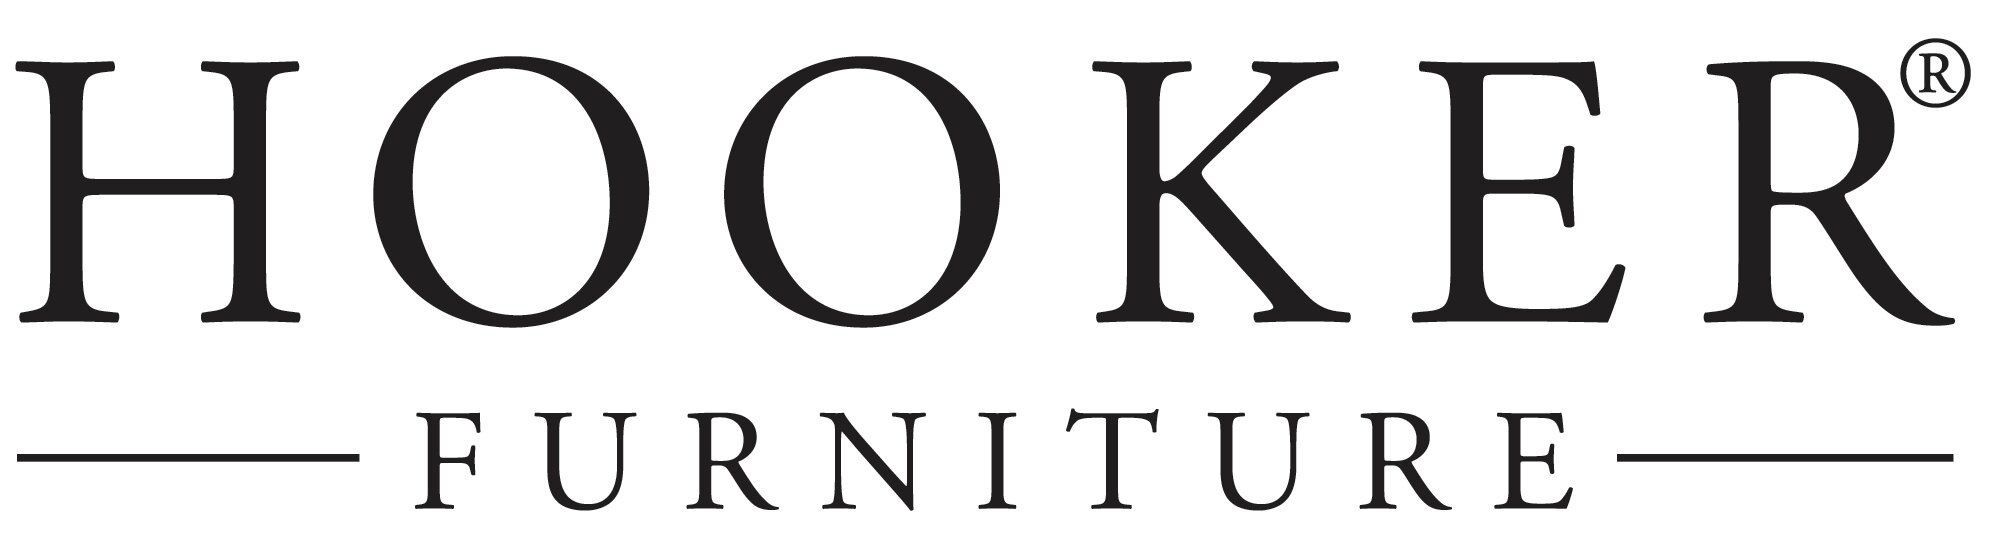 Логотип Hooker Furniture